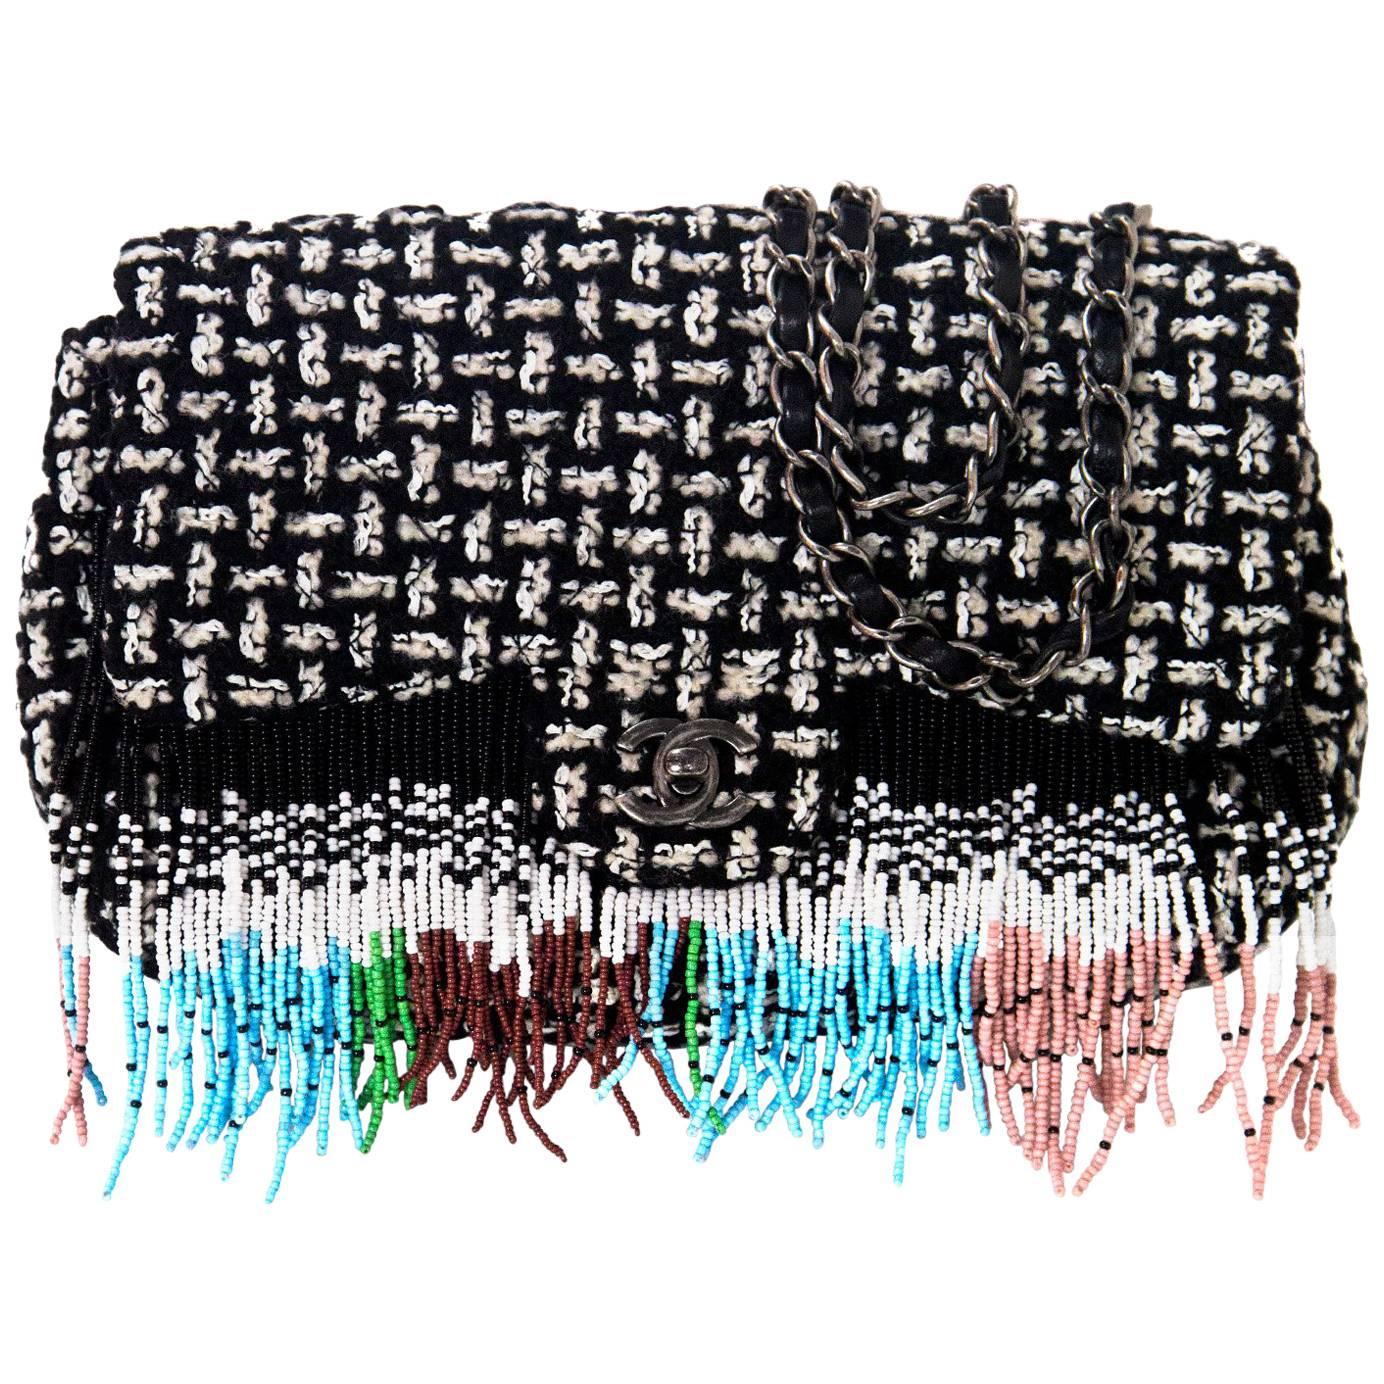 Chanel 2014 Black & White Tweed Paris/Dallas Beaded Fringe Flap Bag rt. $6, 700